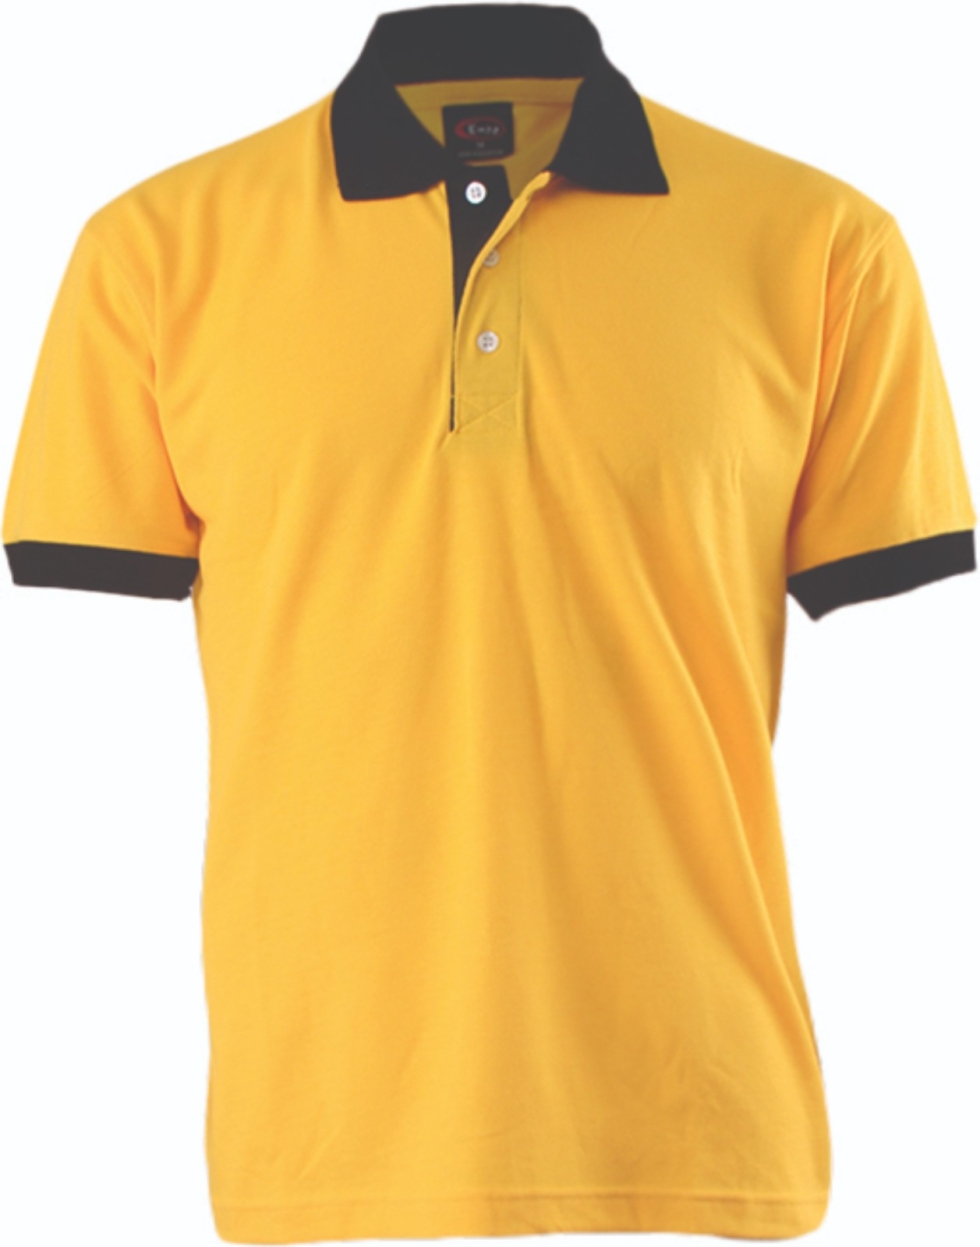 T-shirt Collar | Polo T-shirt | Plain Collar T-shirt | Adult ENZO 2100